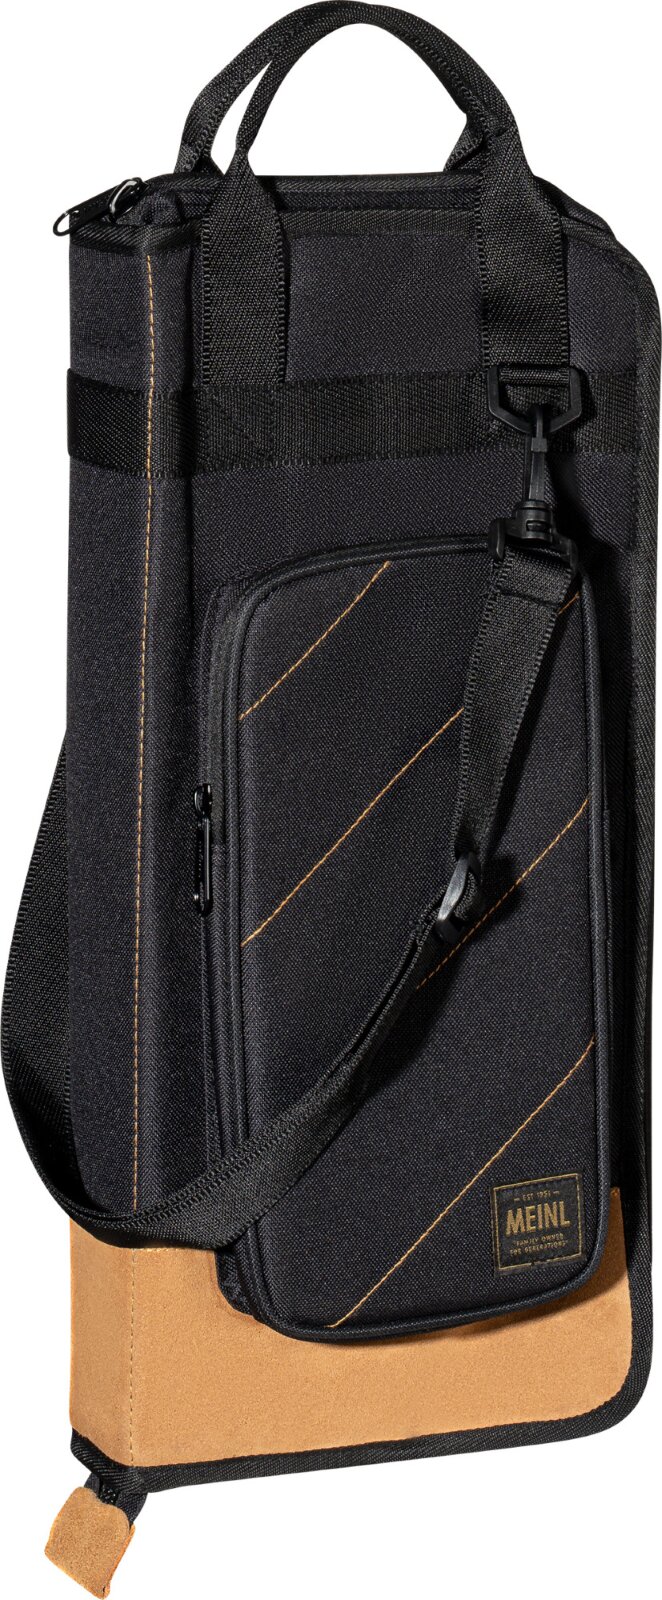 Meinl Classic Woven Stick Bag Black : photo 1